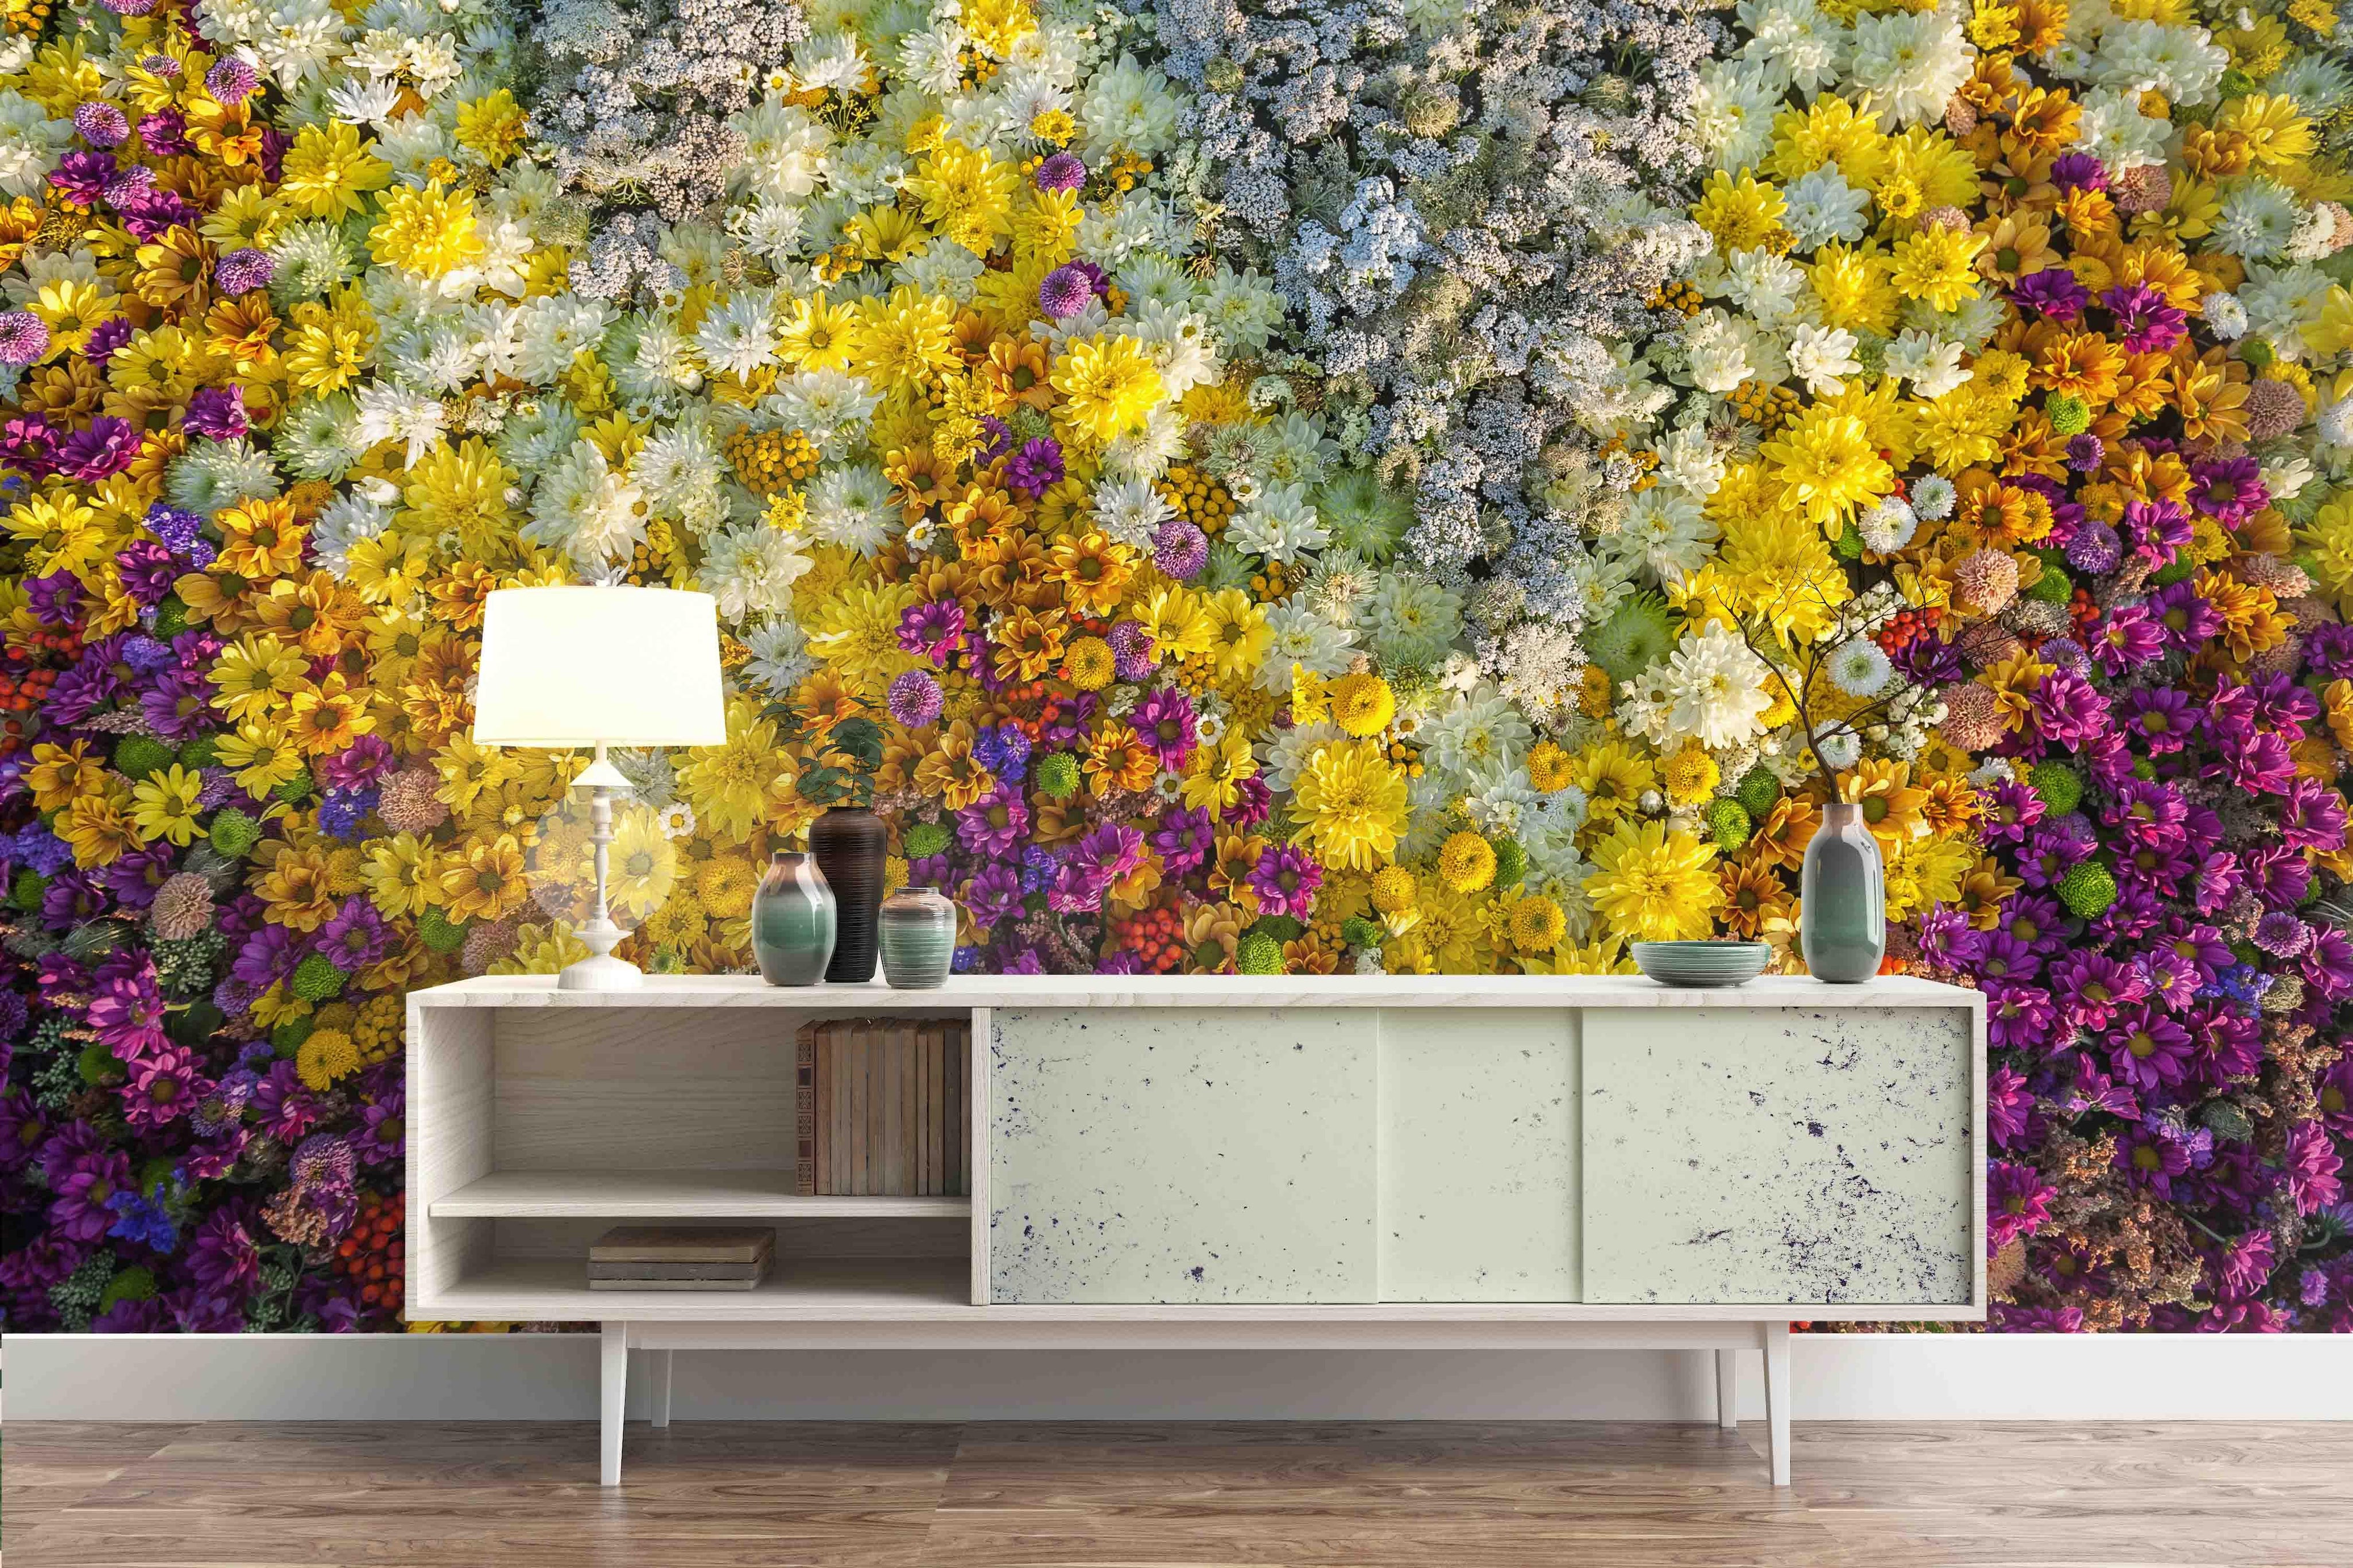 3D Colorful Flowers Wall Mural Wallpaper 12- Jess Art Decoration